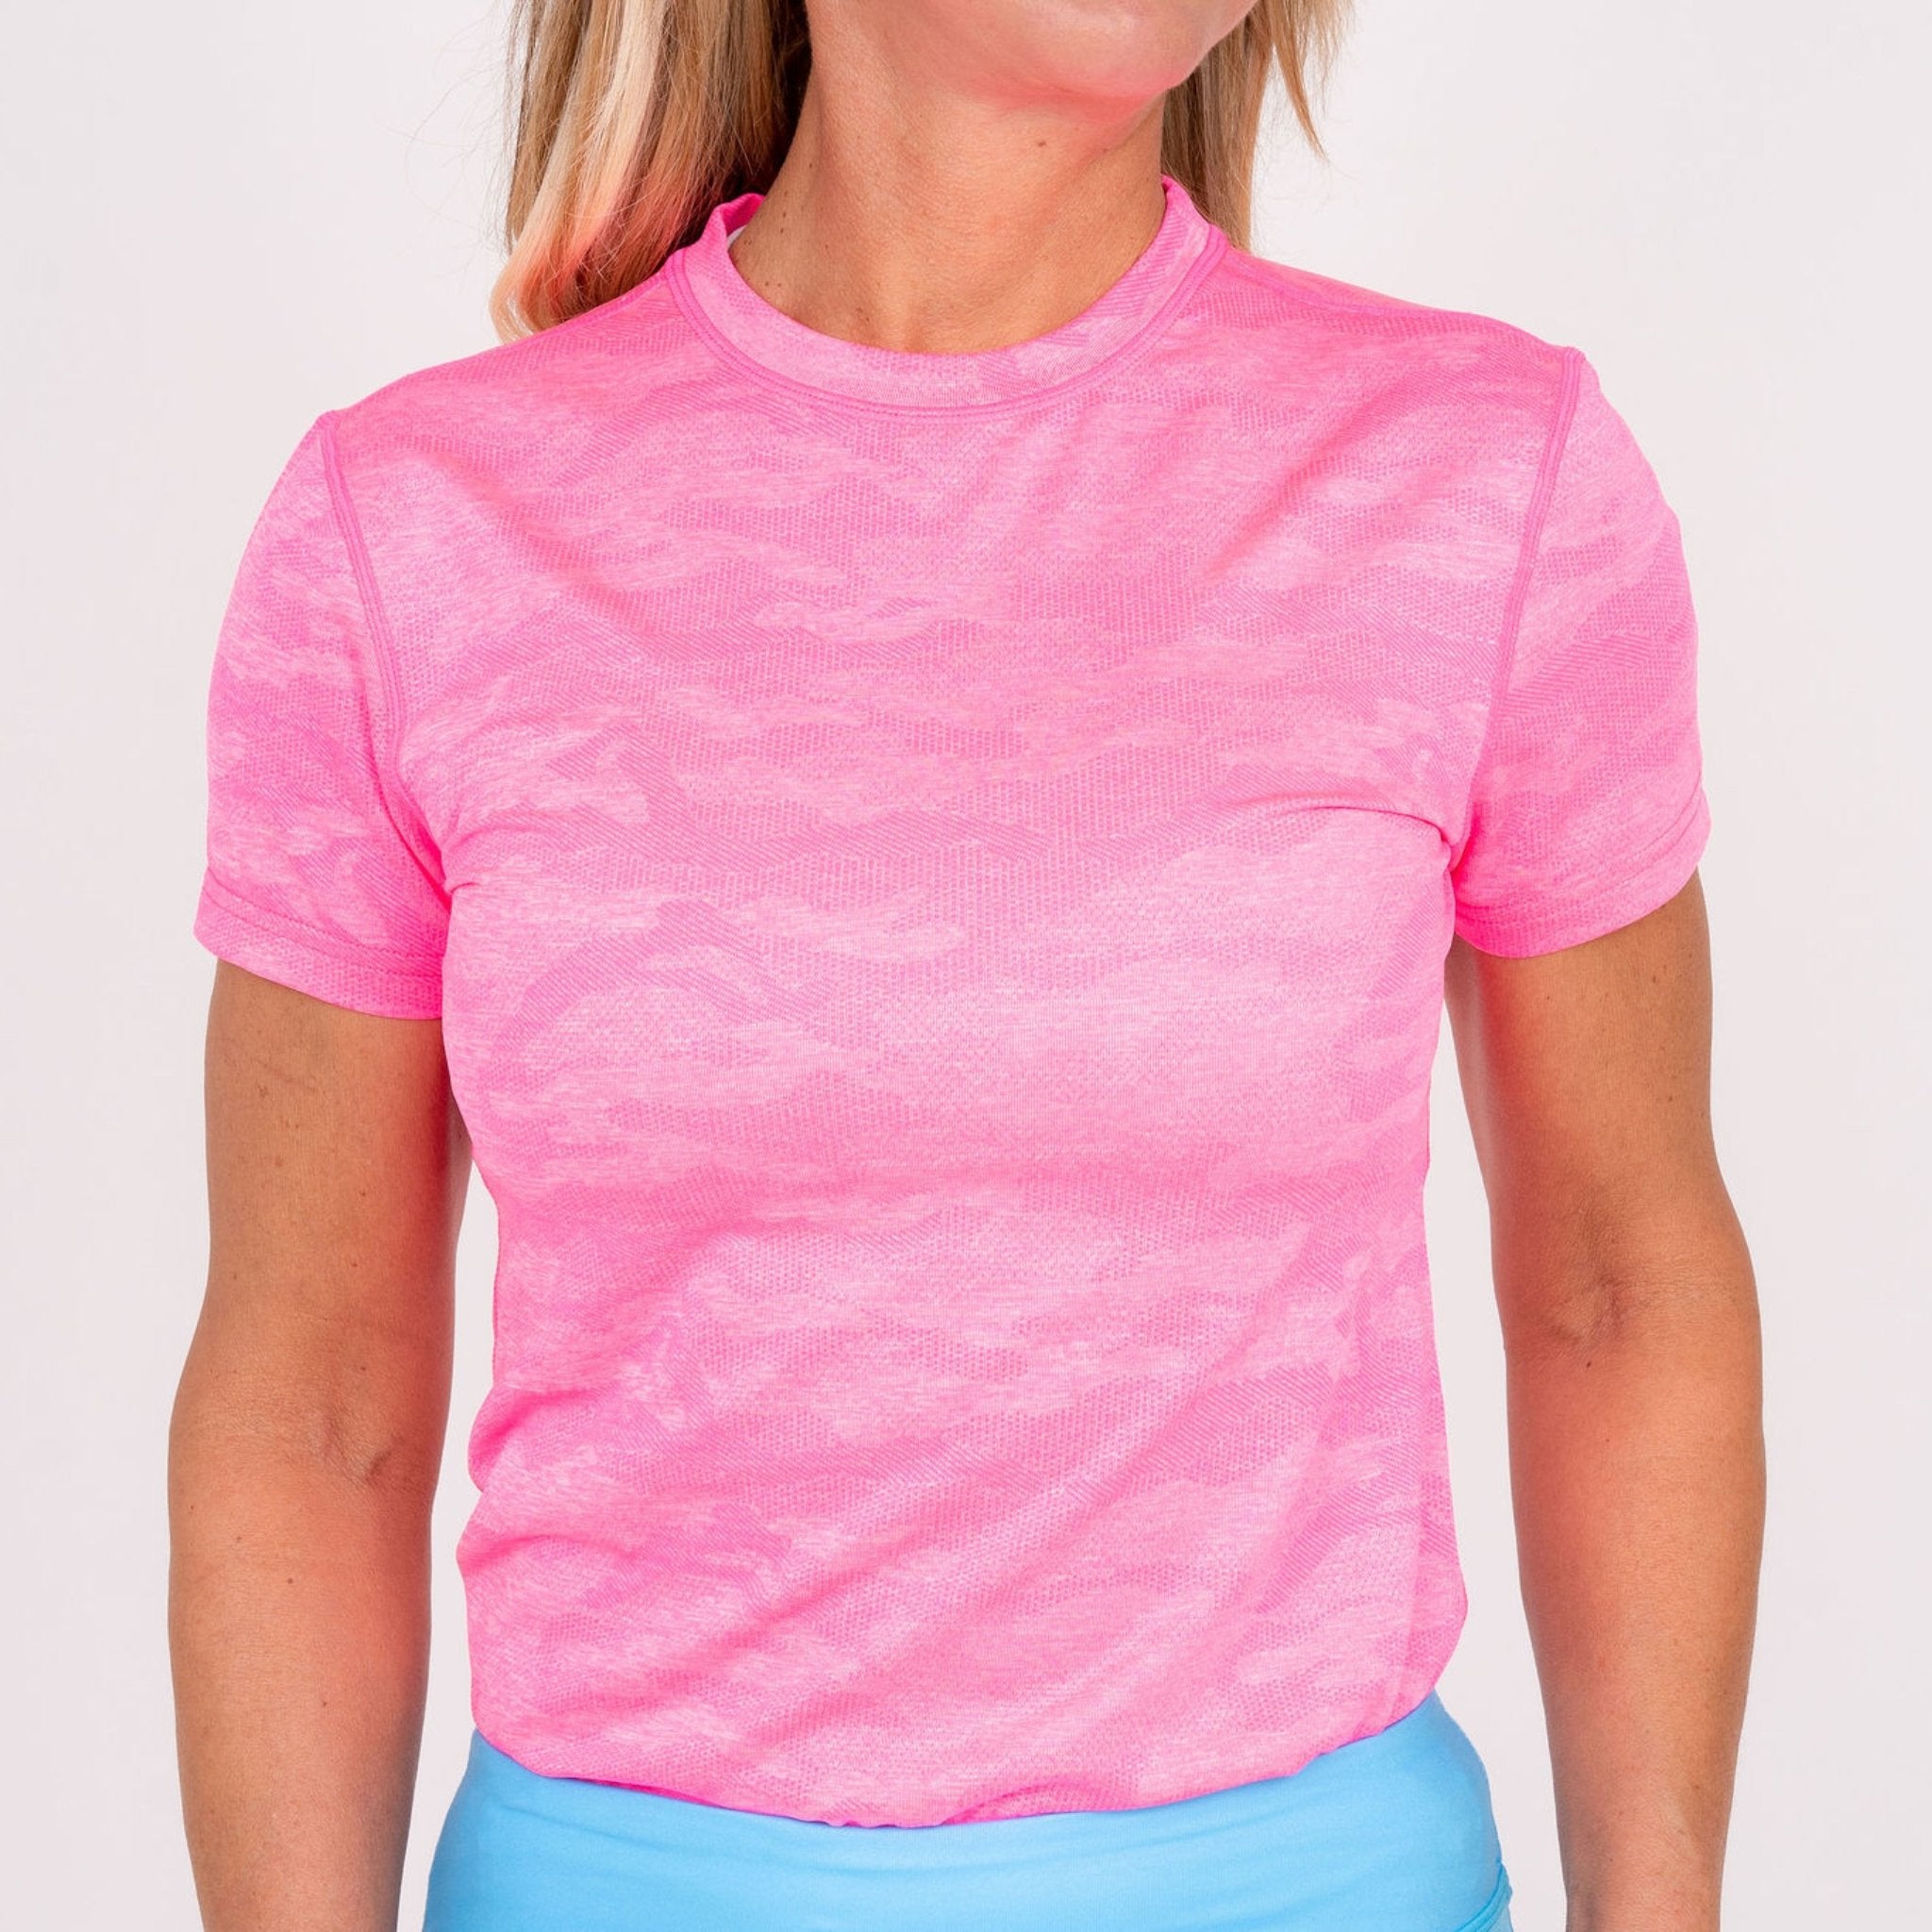 Jordan's Collarless Short Sleeve - Neon Pink Ghost Camo - Fairway Fittings